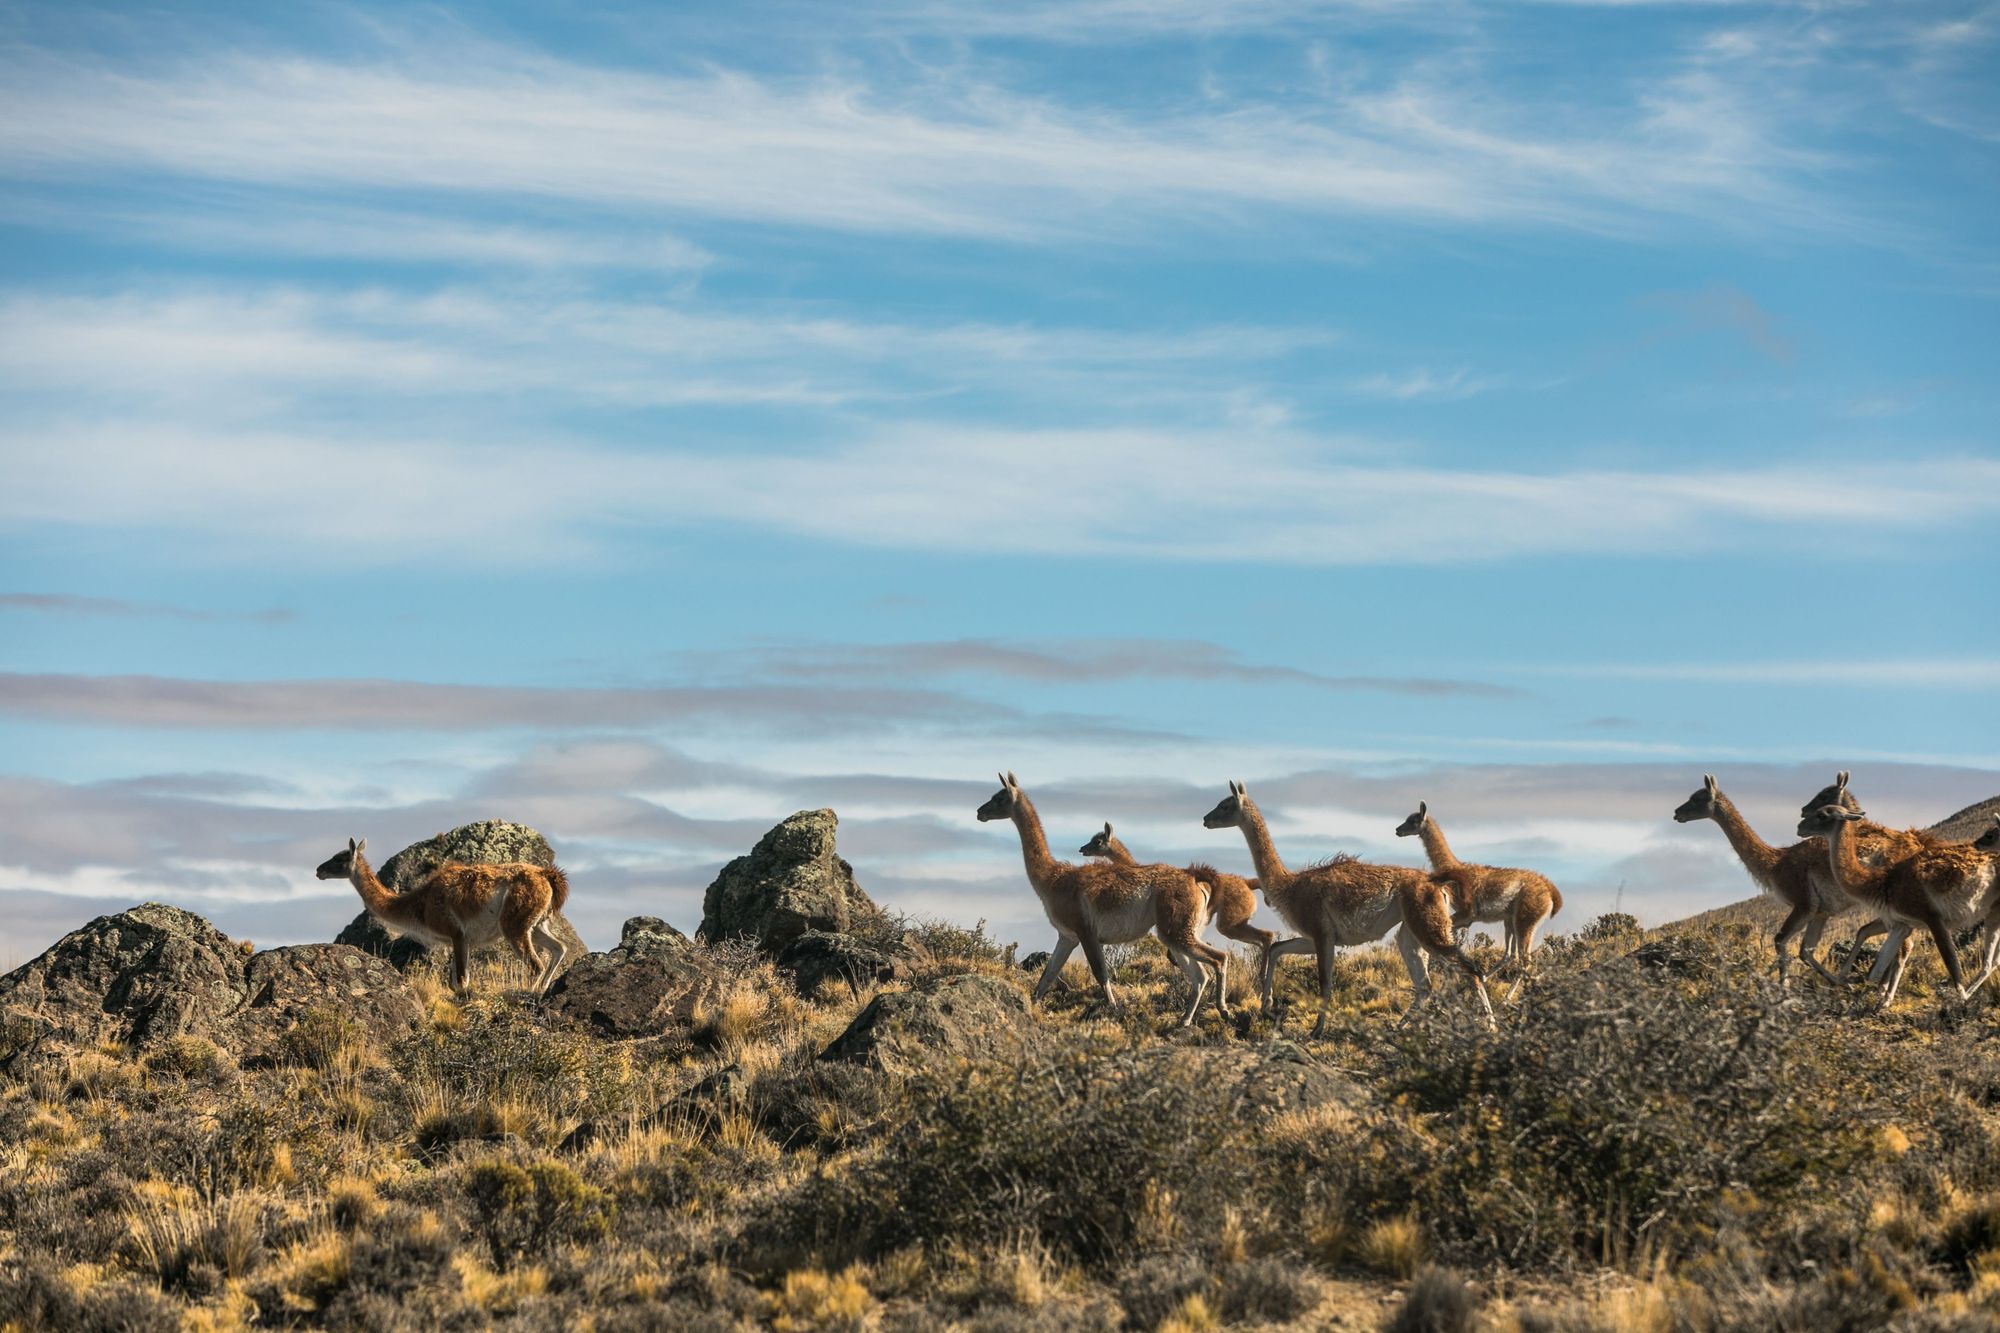 A herd of guanacos, ancestors of the llama, make their way across the plains of Parque Patagonia Argentina. Photo: Estrella Herrera